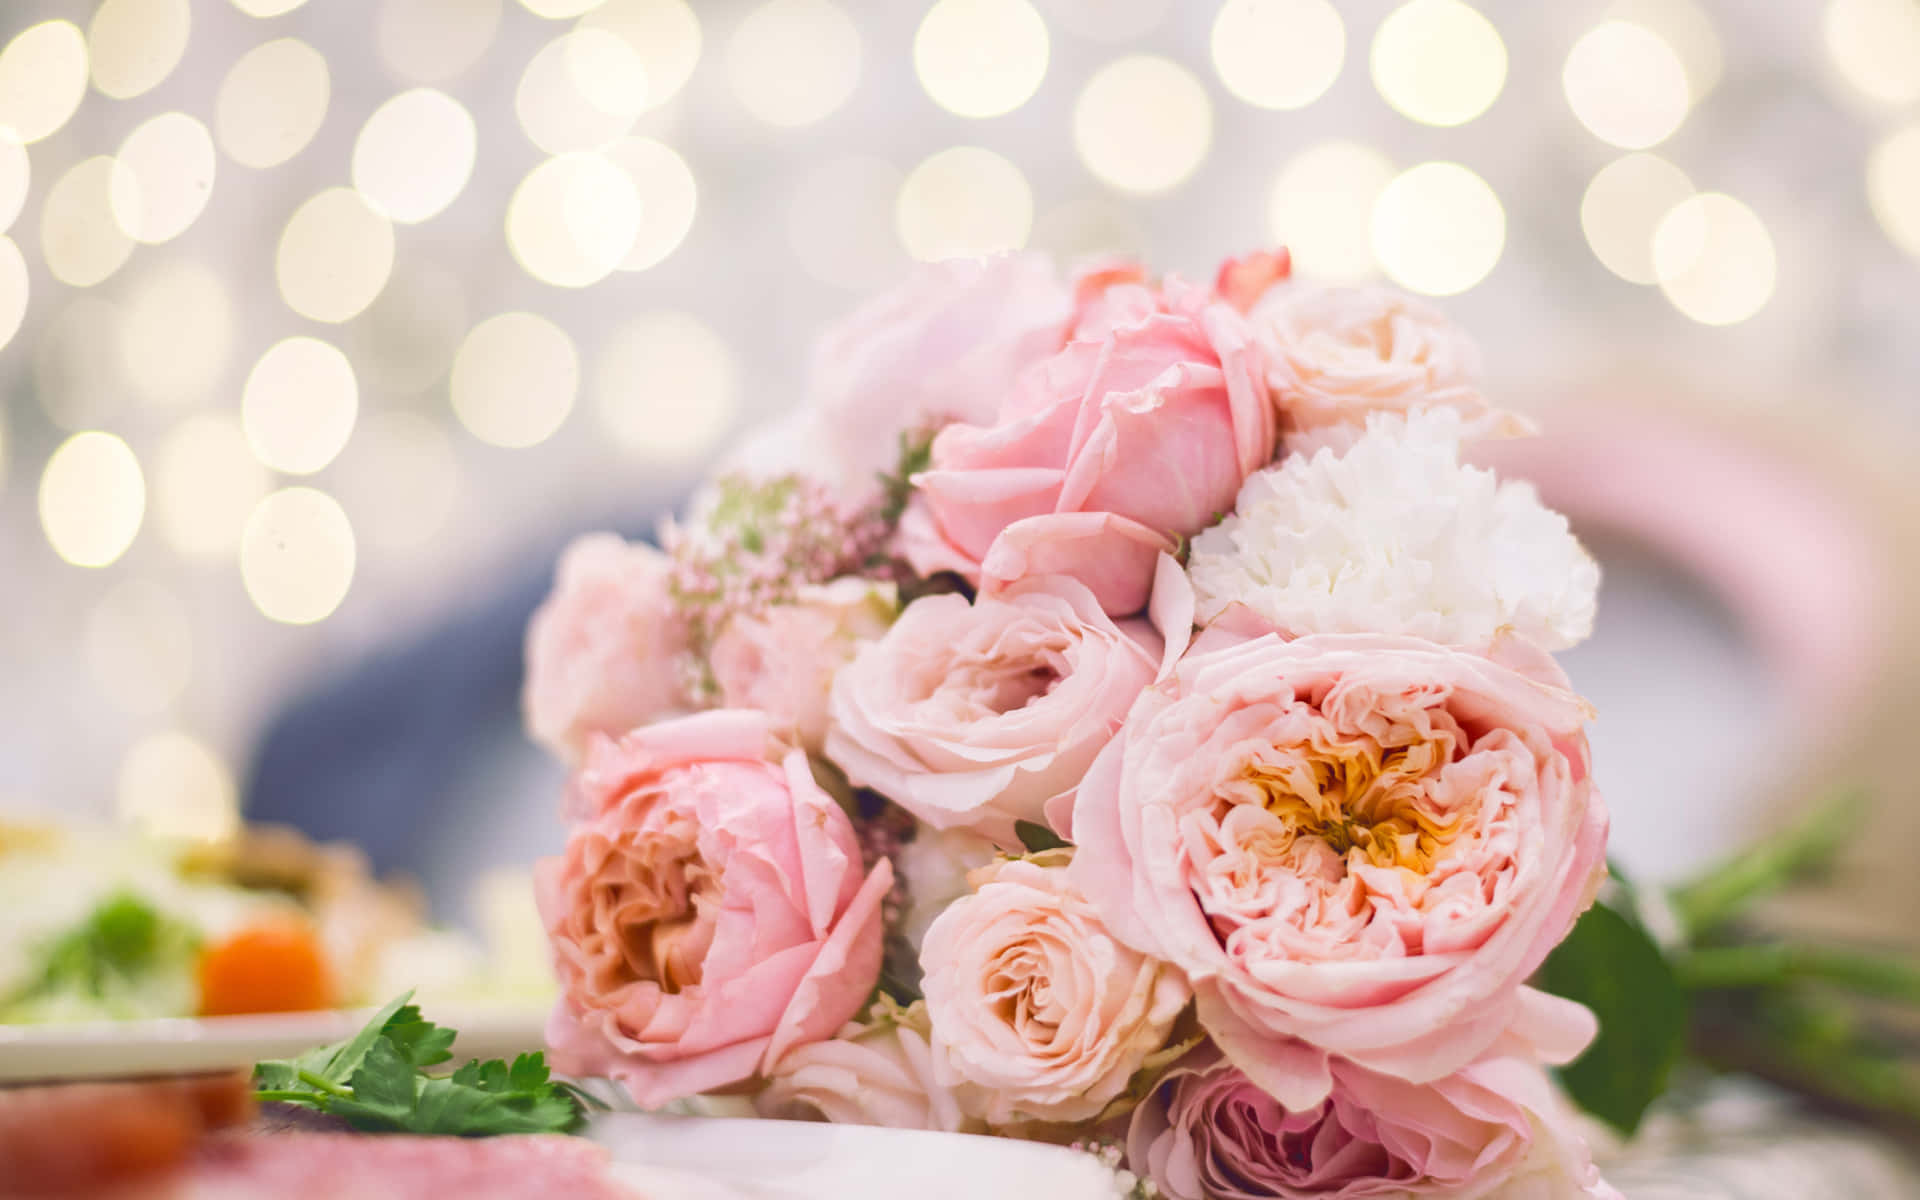 Romantic Wedding Bouquet in a Bride's Hand Wallpaper